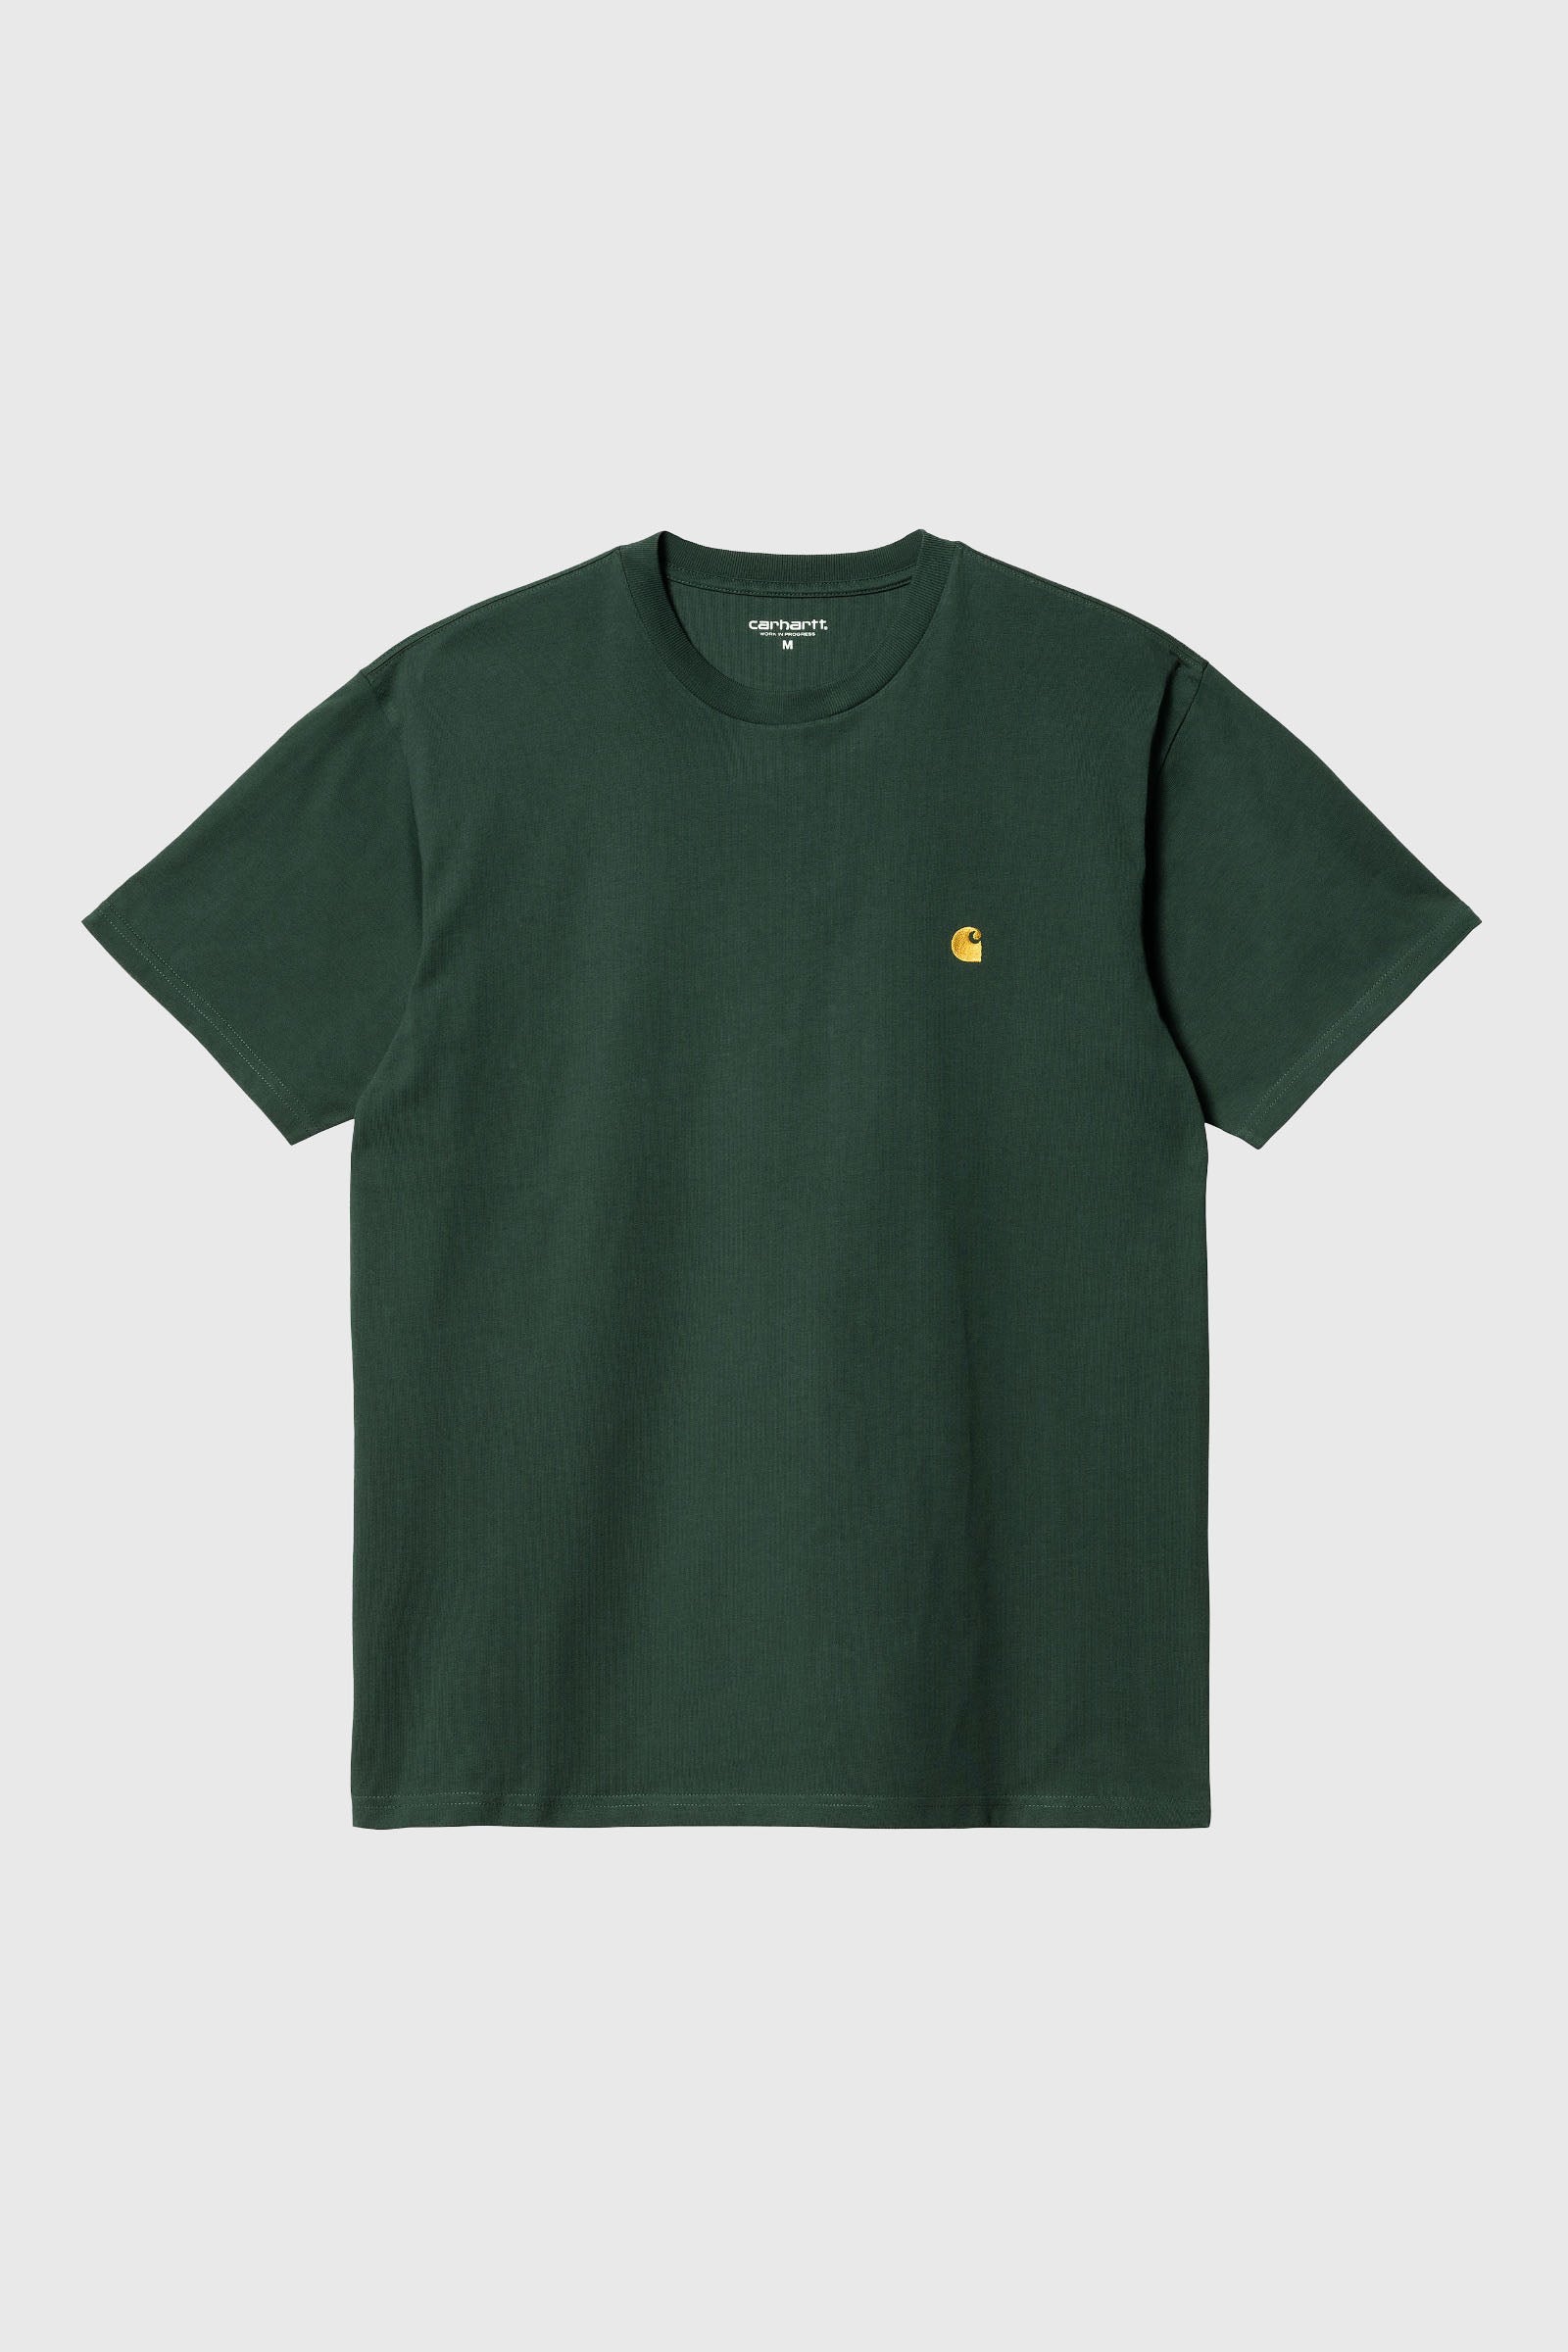 Carhartt Wip T-shirt S/s Chase Verde - 6